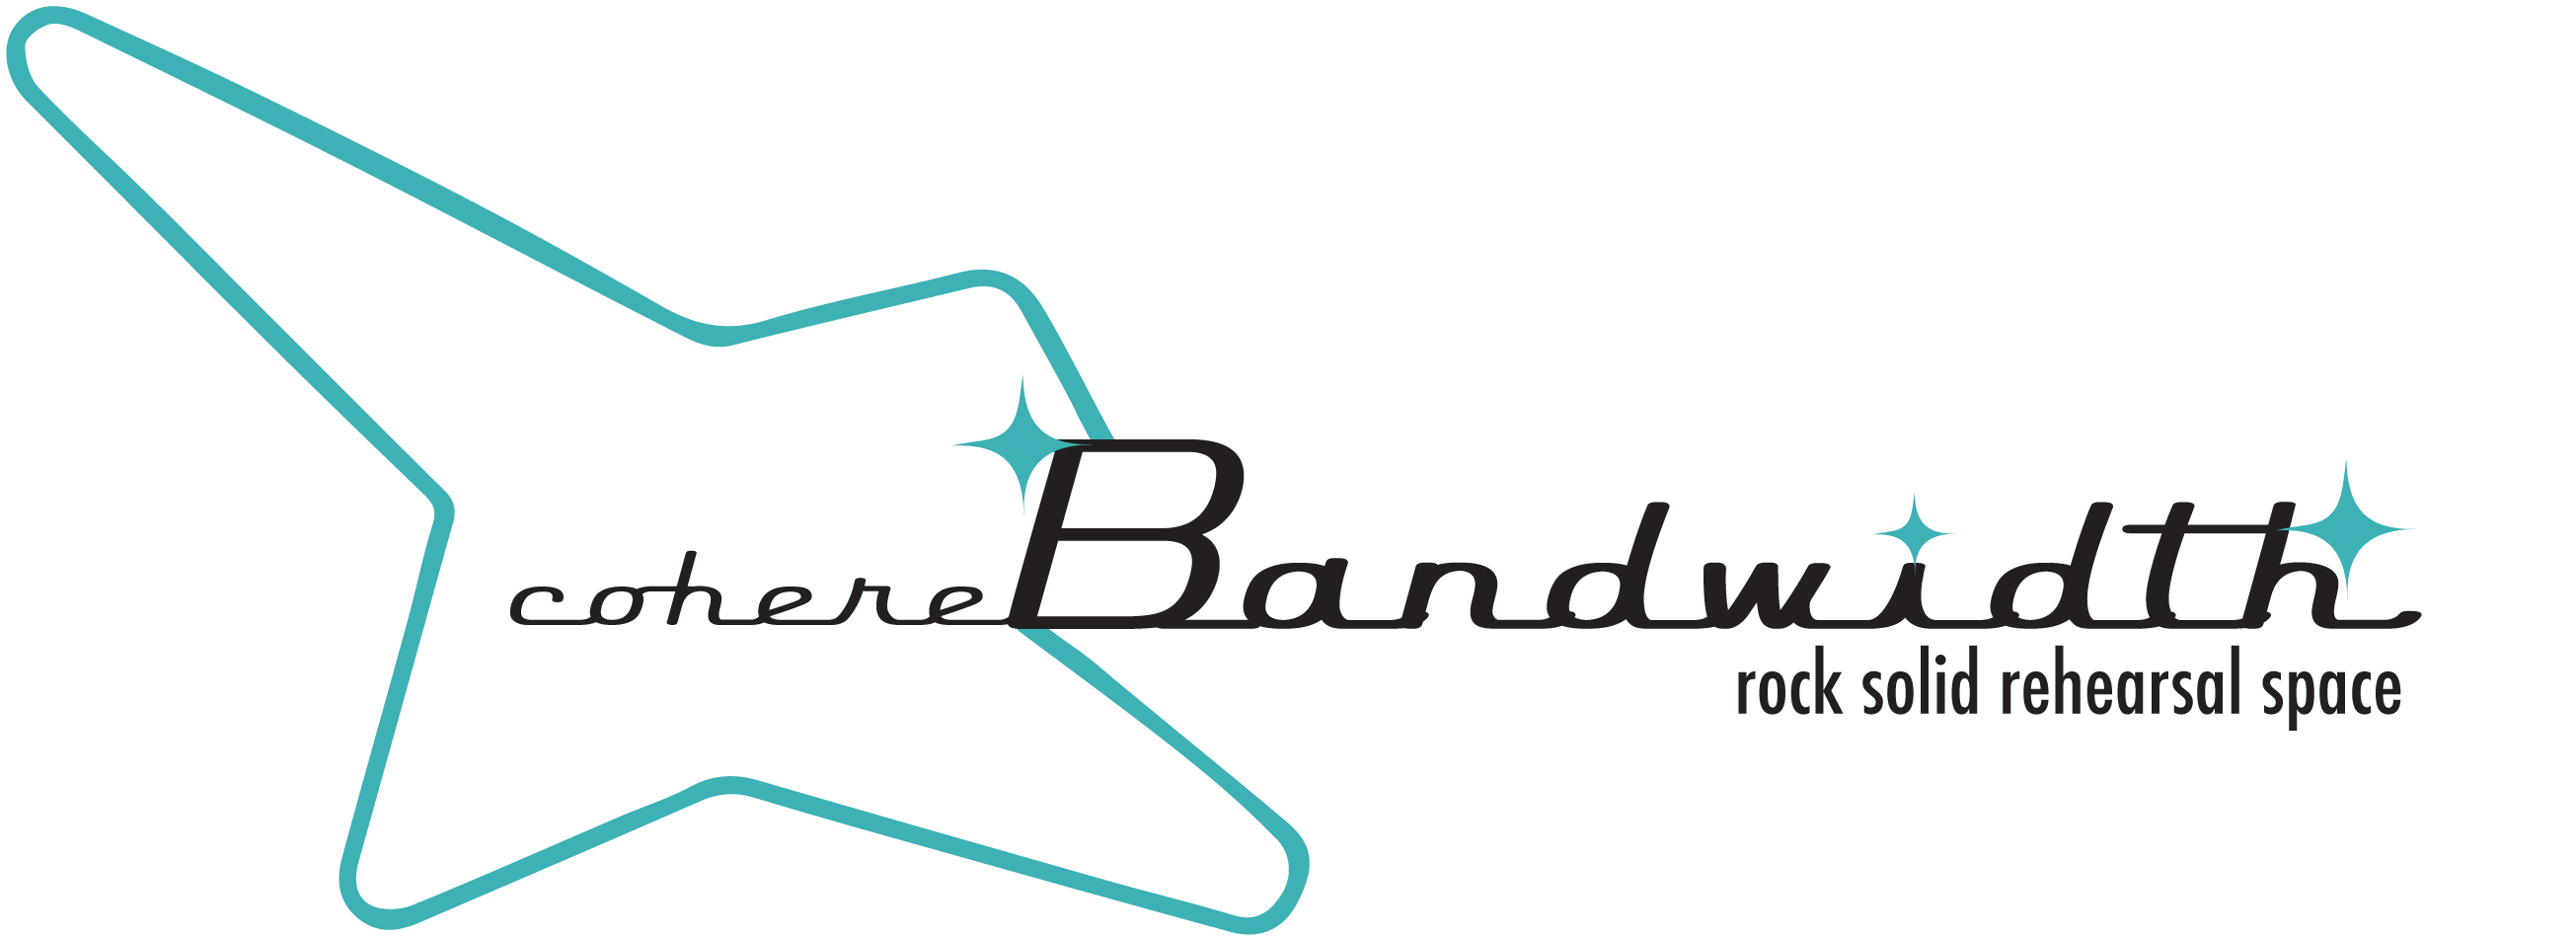 bandwidth logo horizontal   tagline